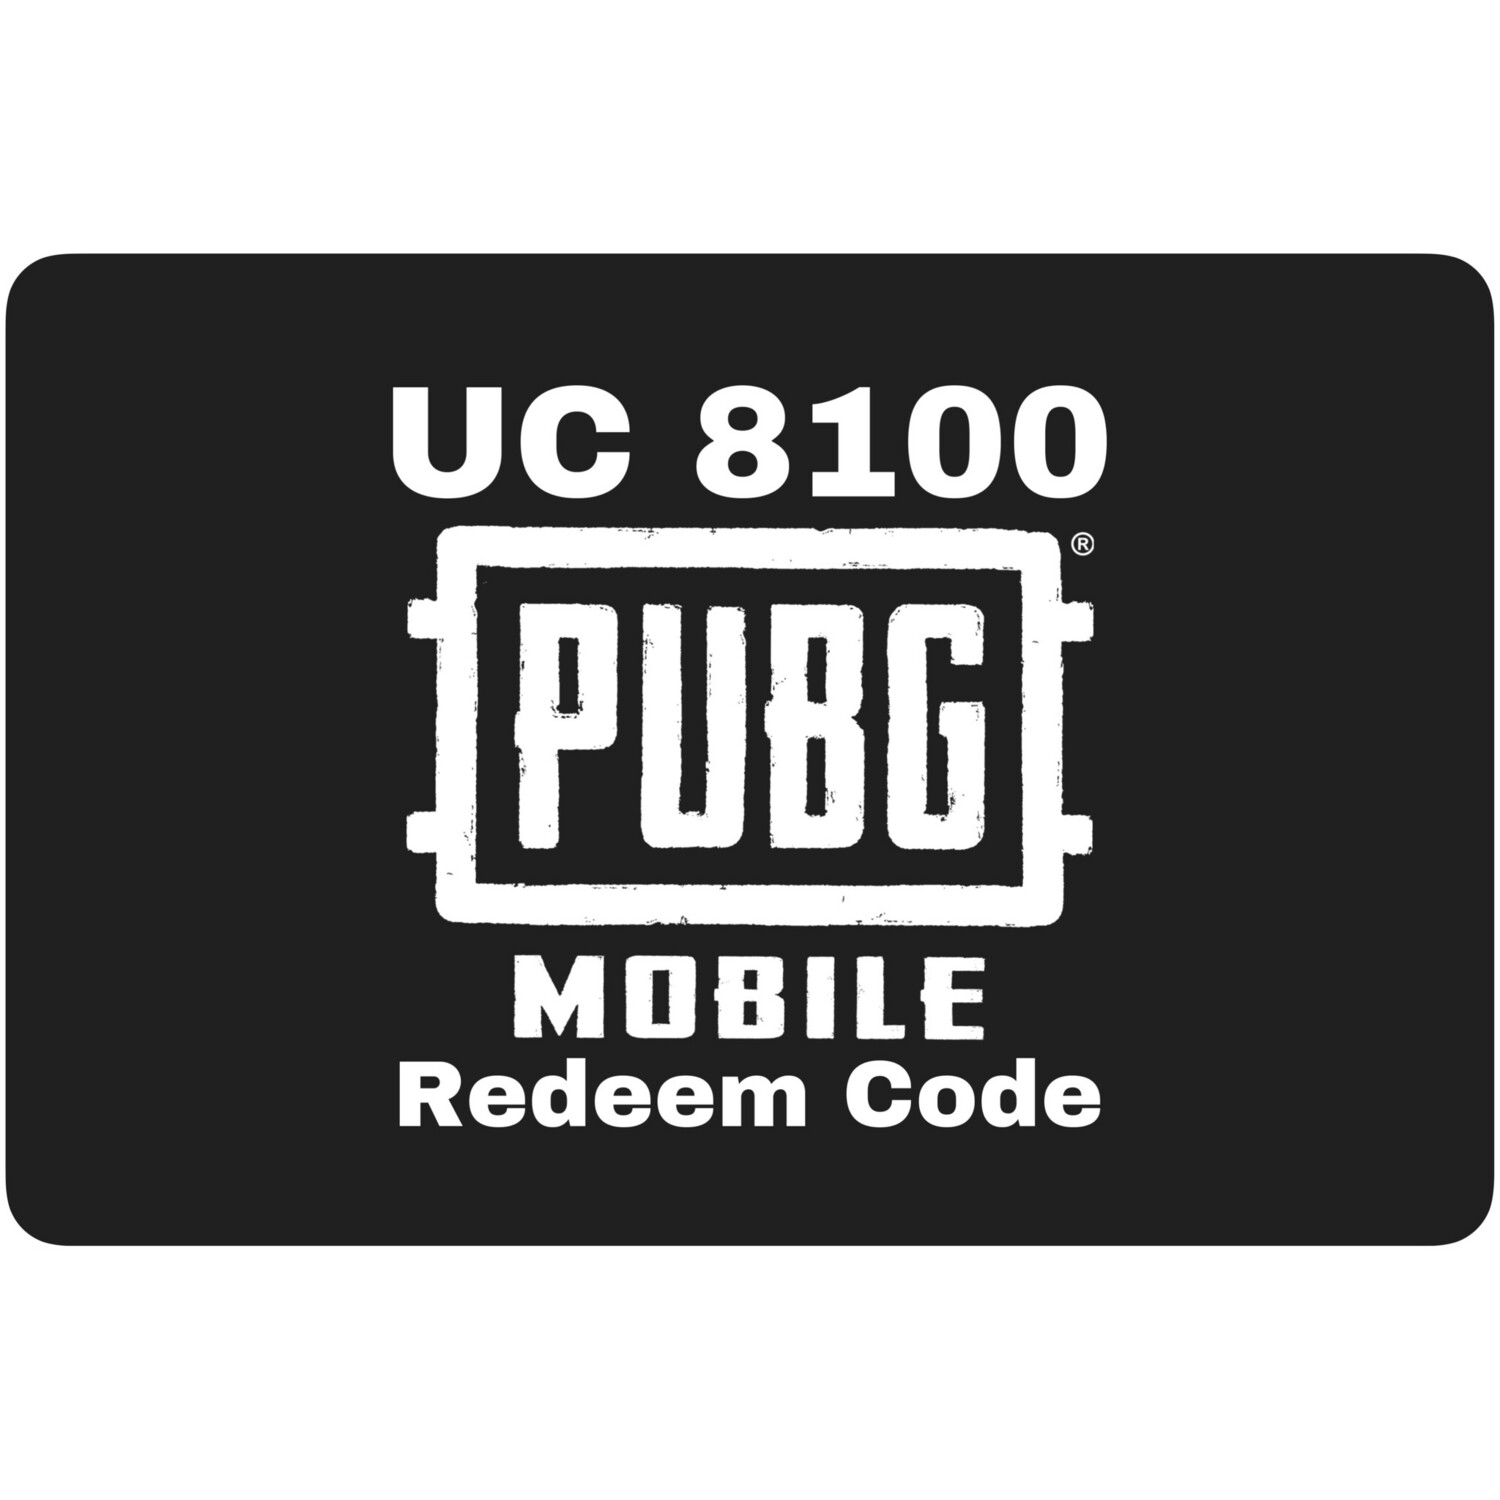 PUBG Mobile UC 8100 Redeem Code Global Voucher